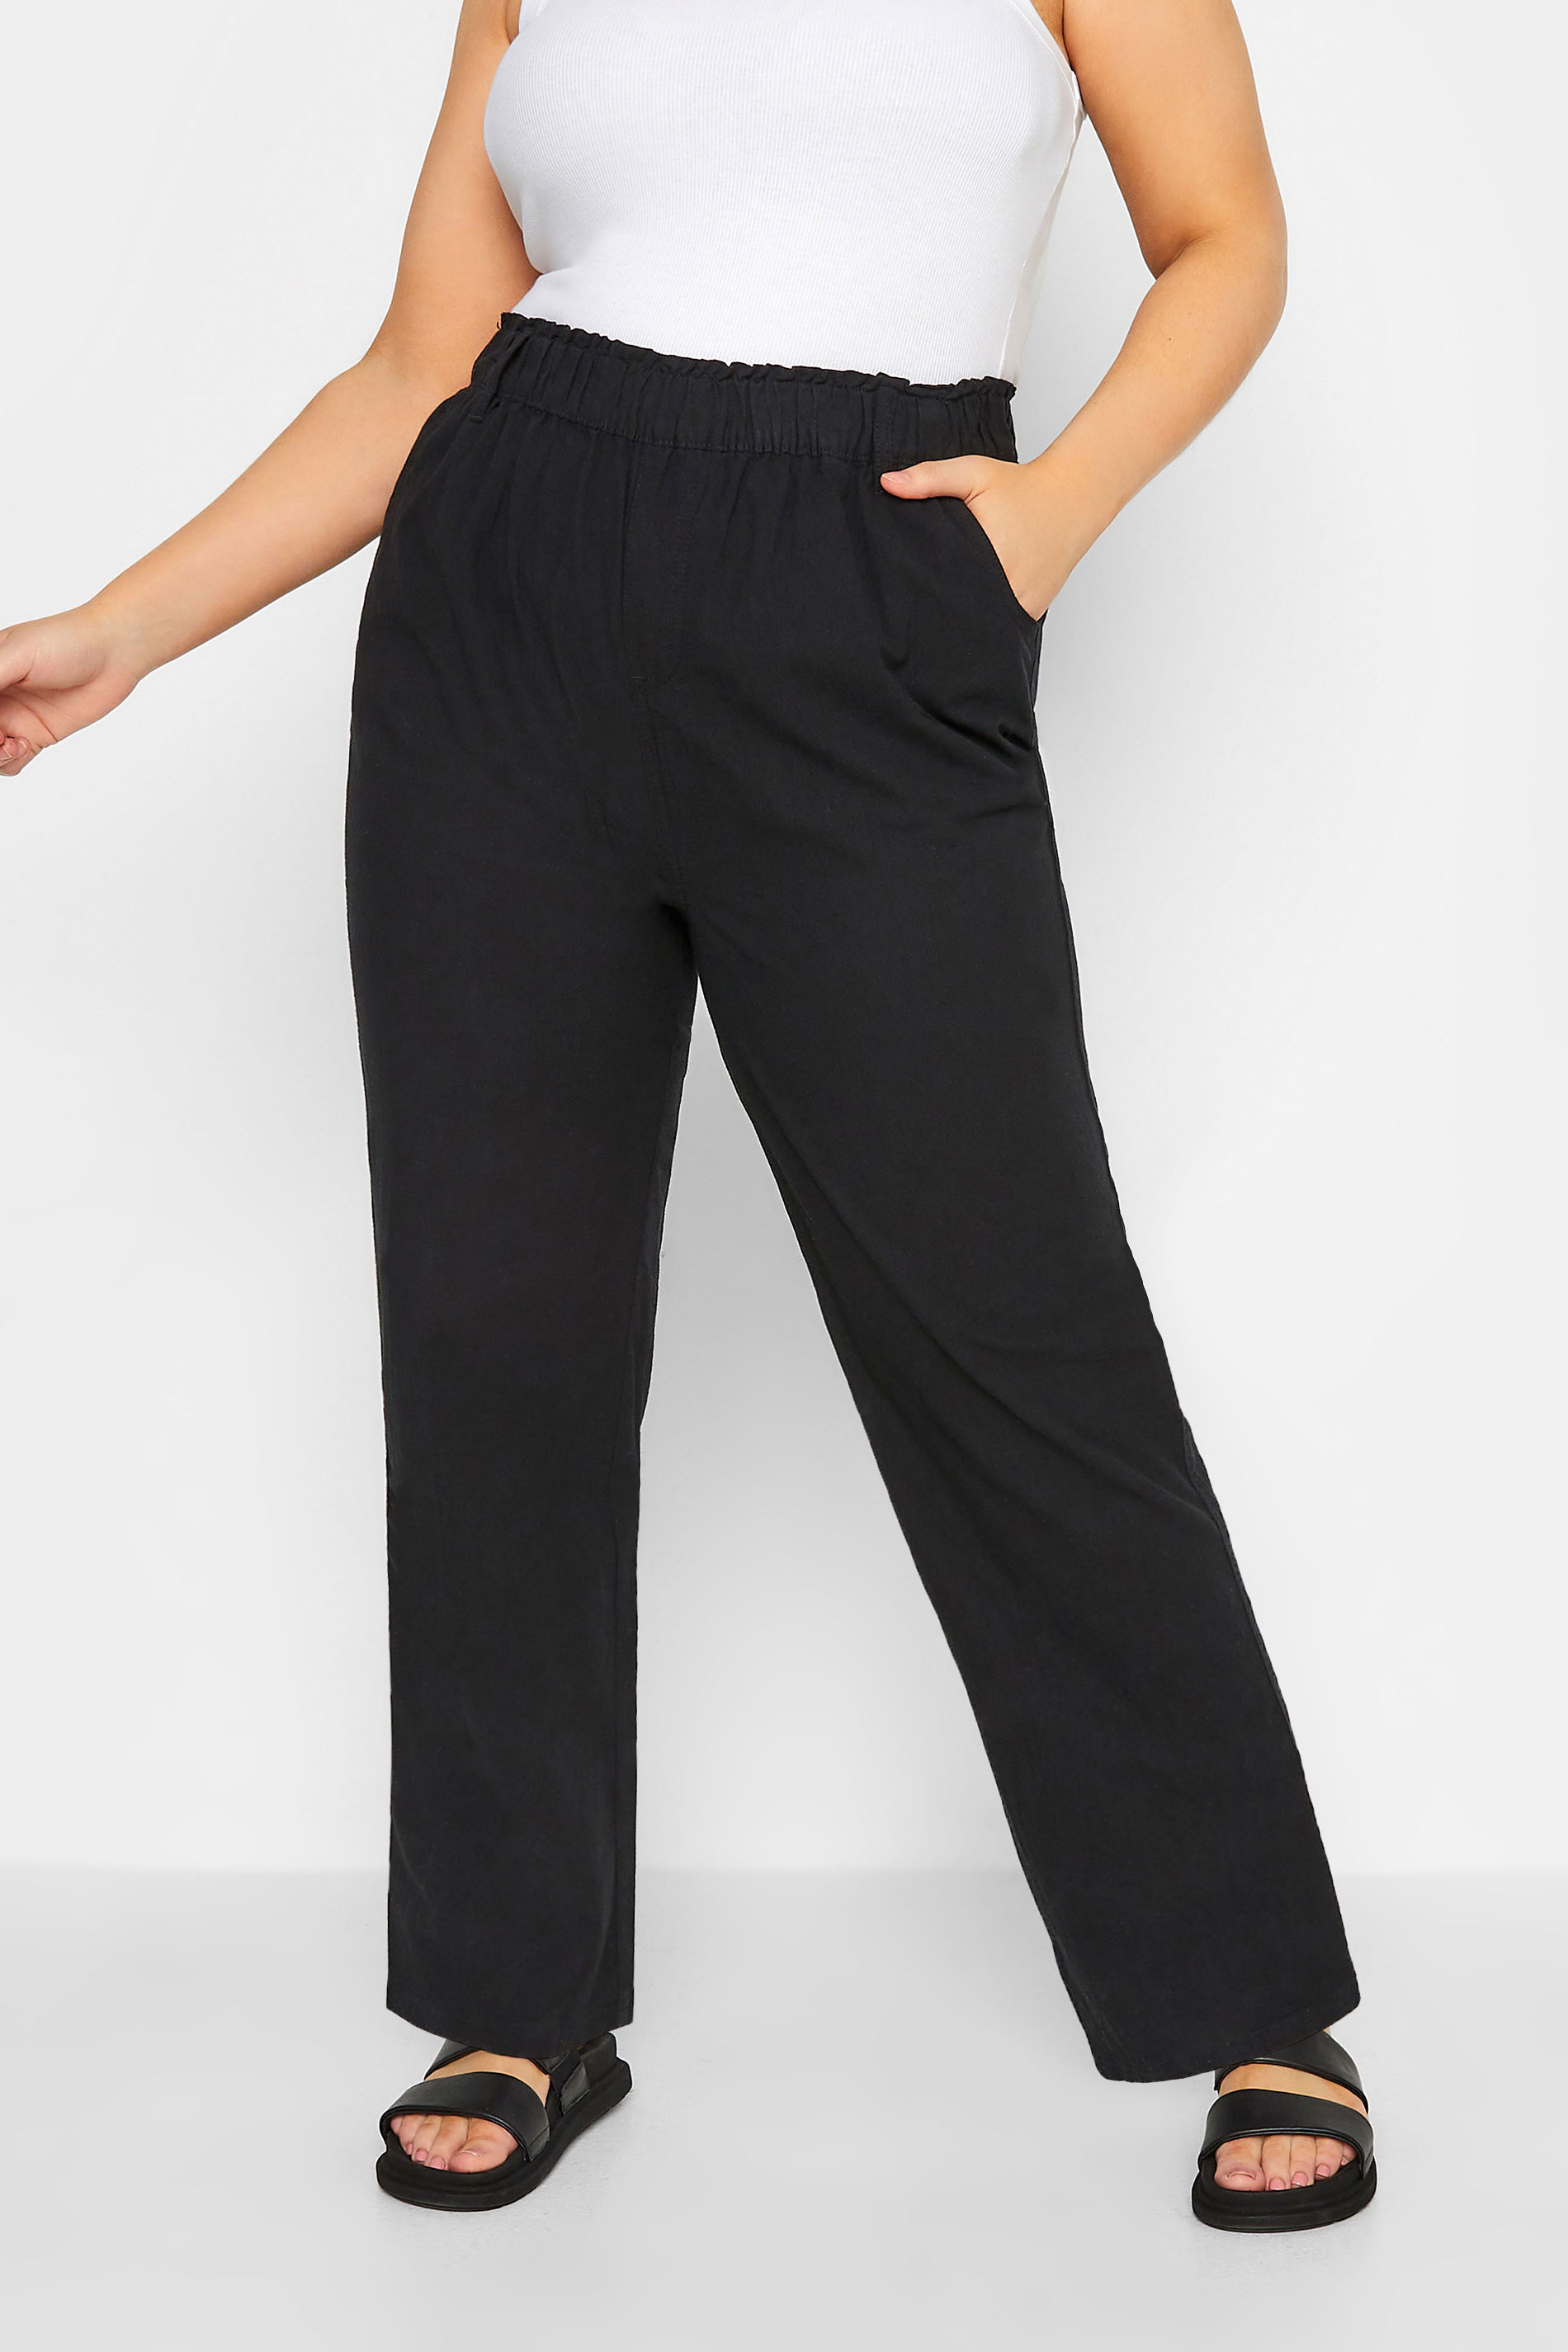 Plus Size Ladies Cotton Linen Casual Long Pants Women Solid Straight  Trousers US | eBay